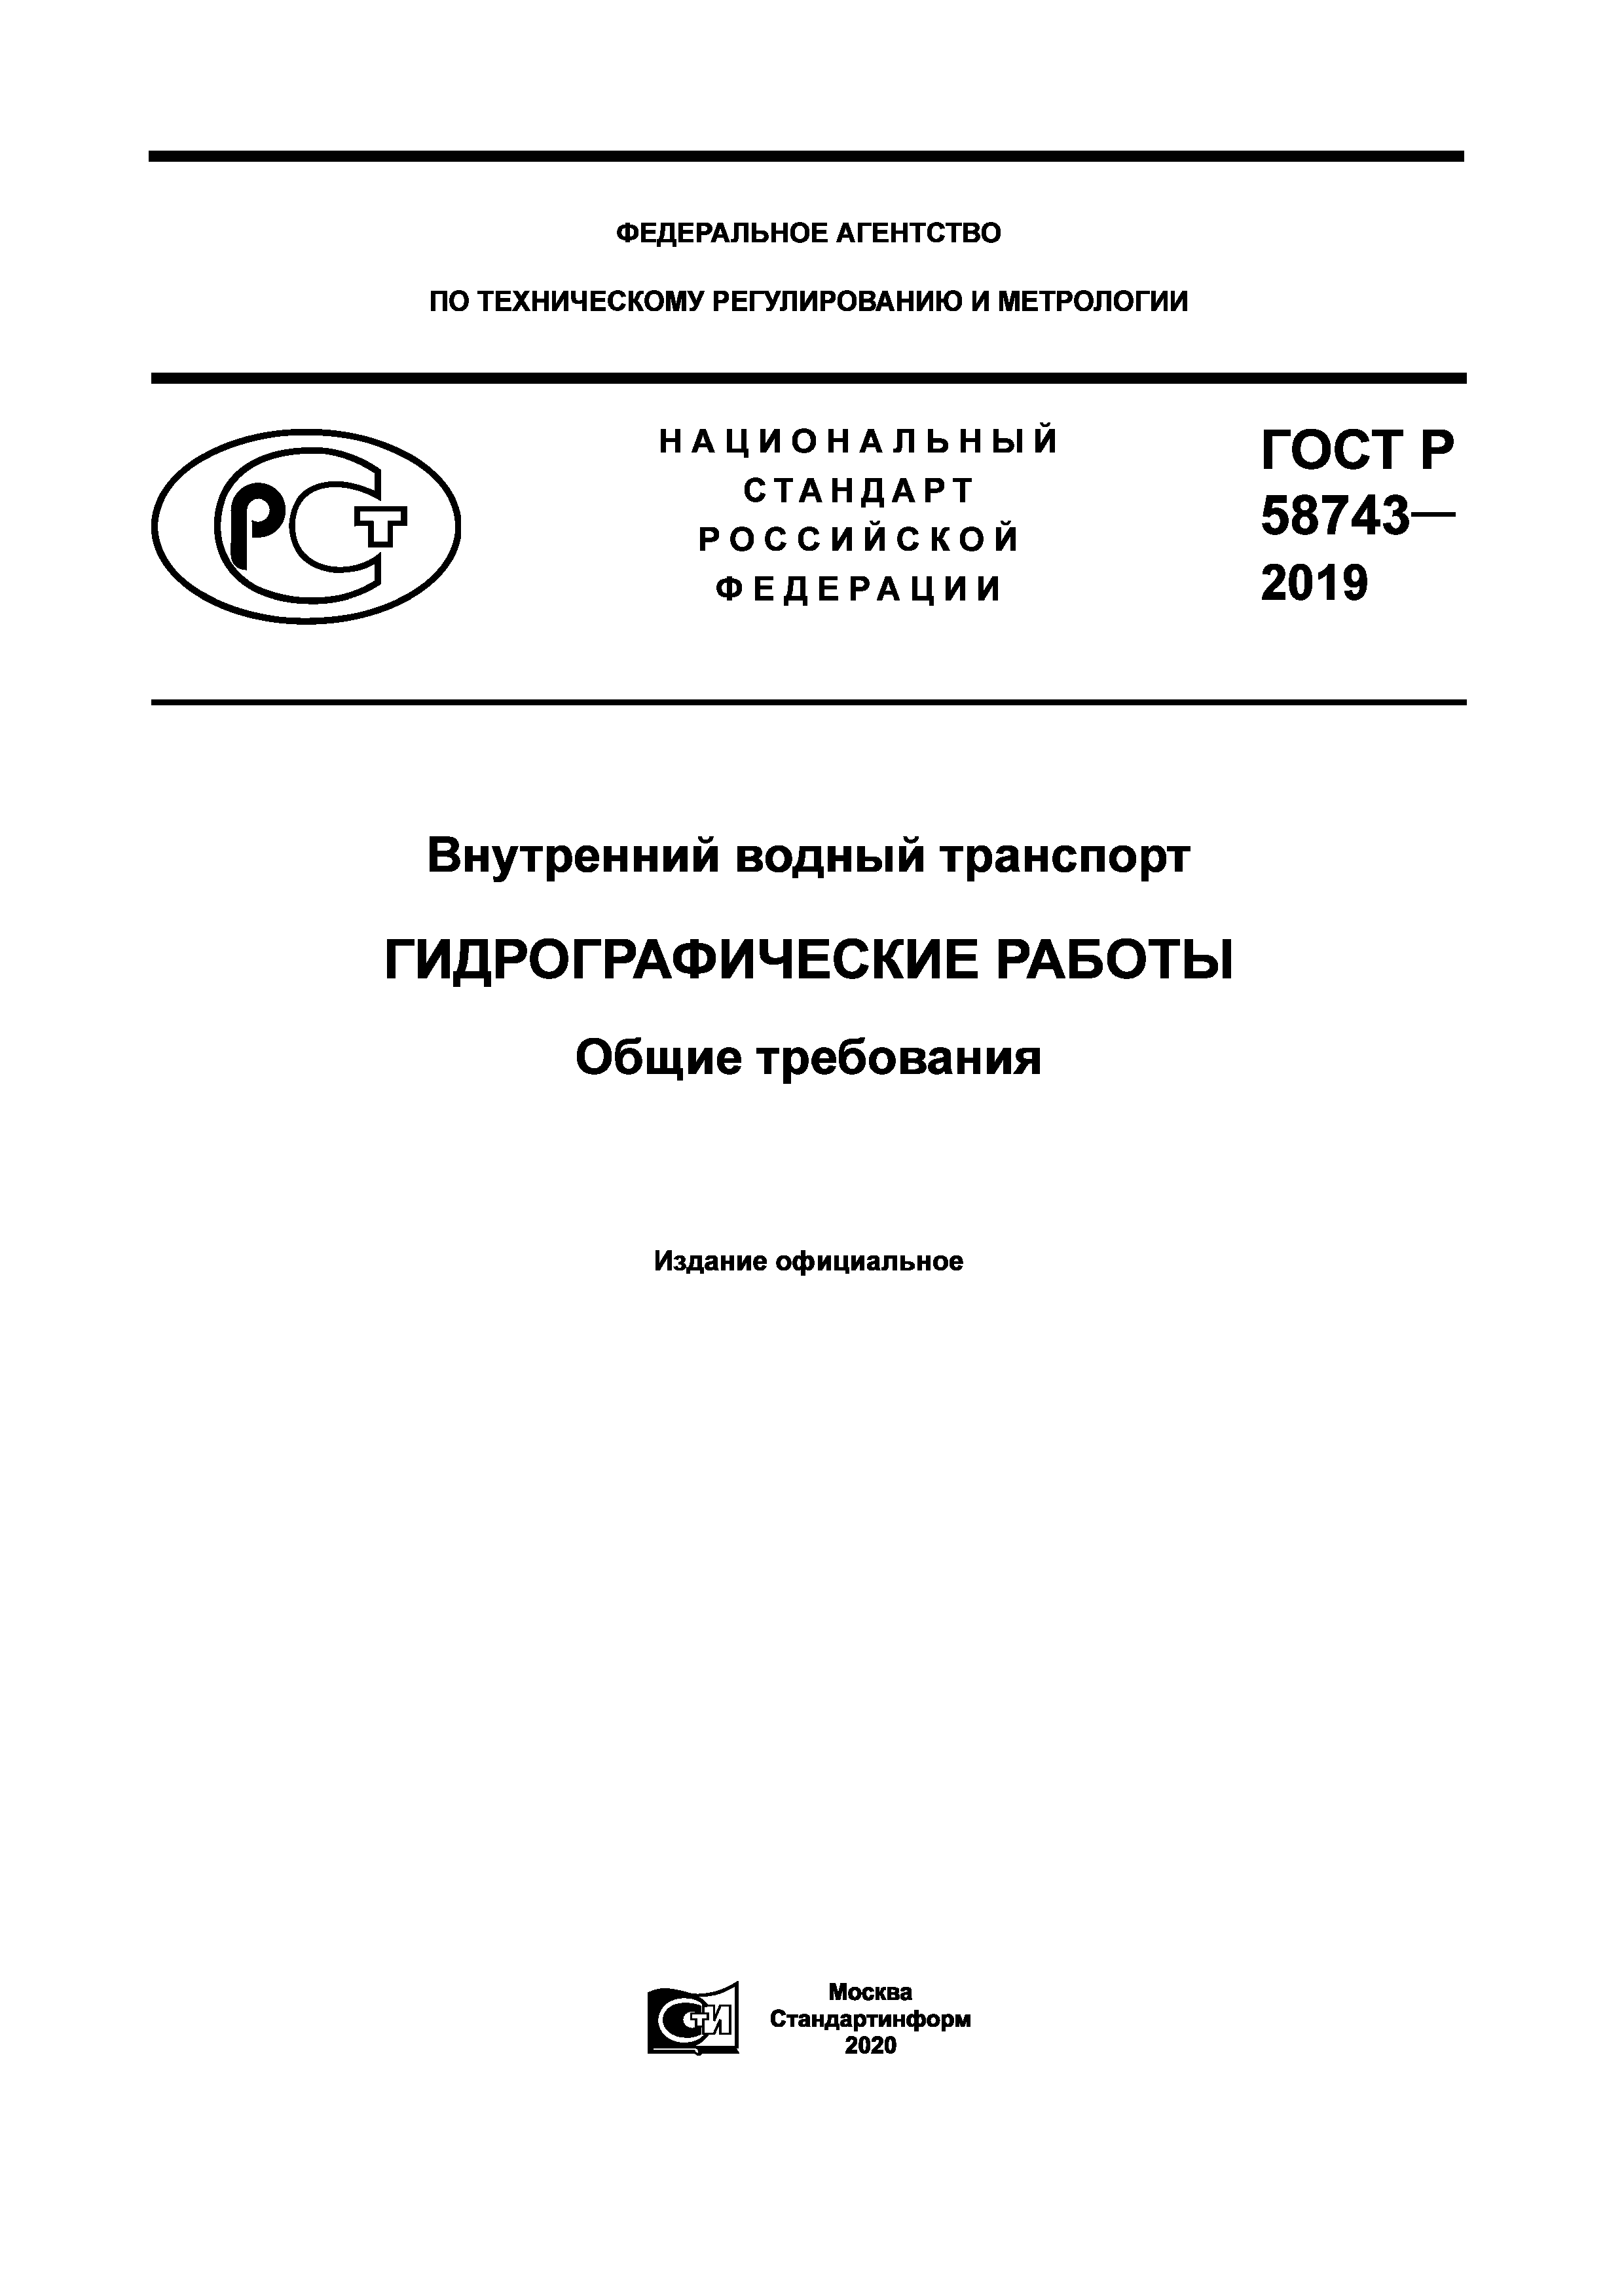 ГОСТ Р 58743-2019